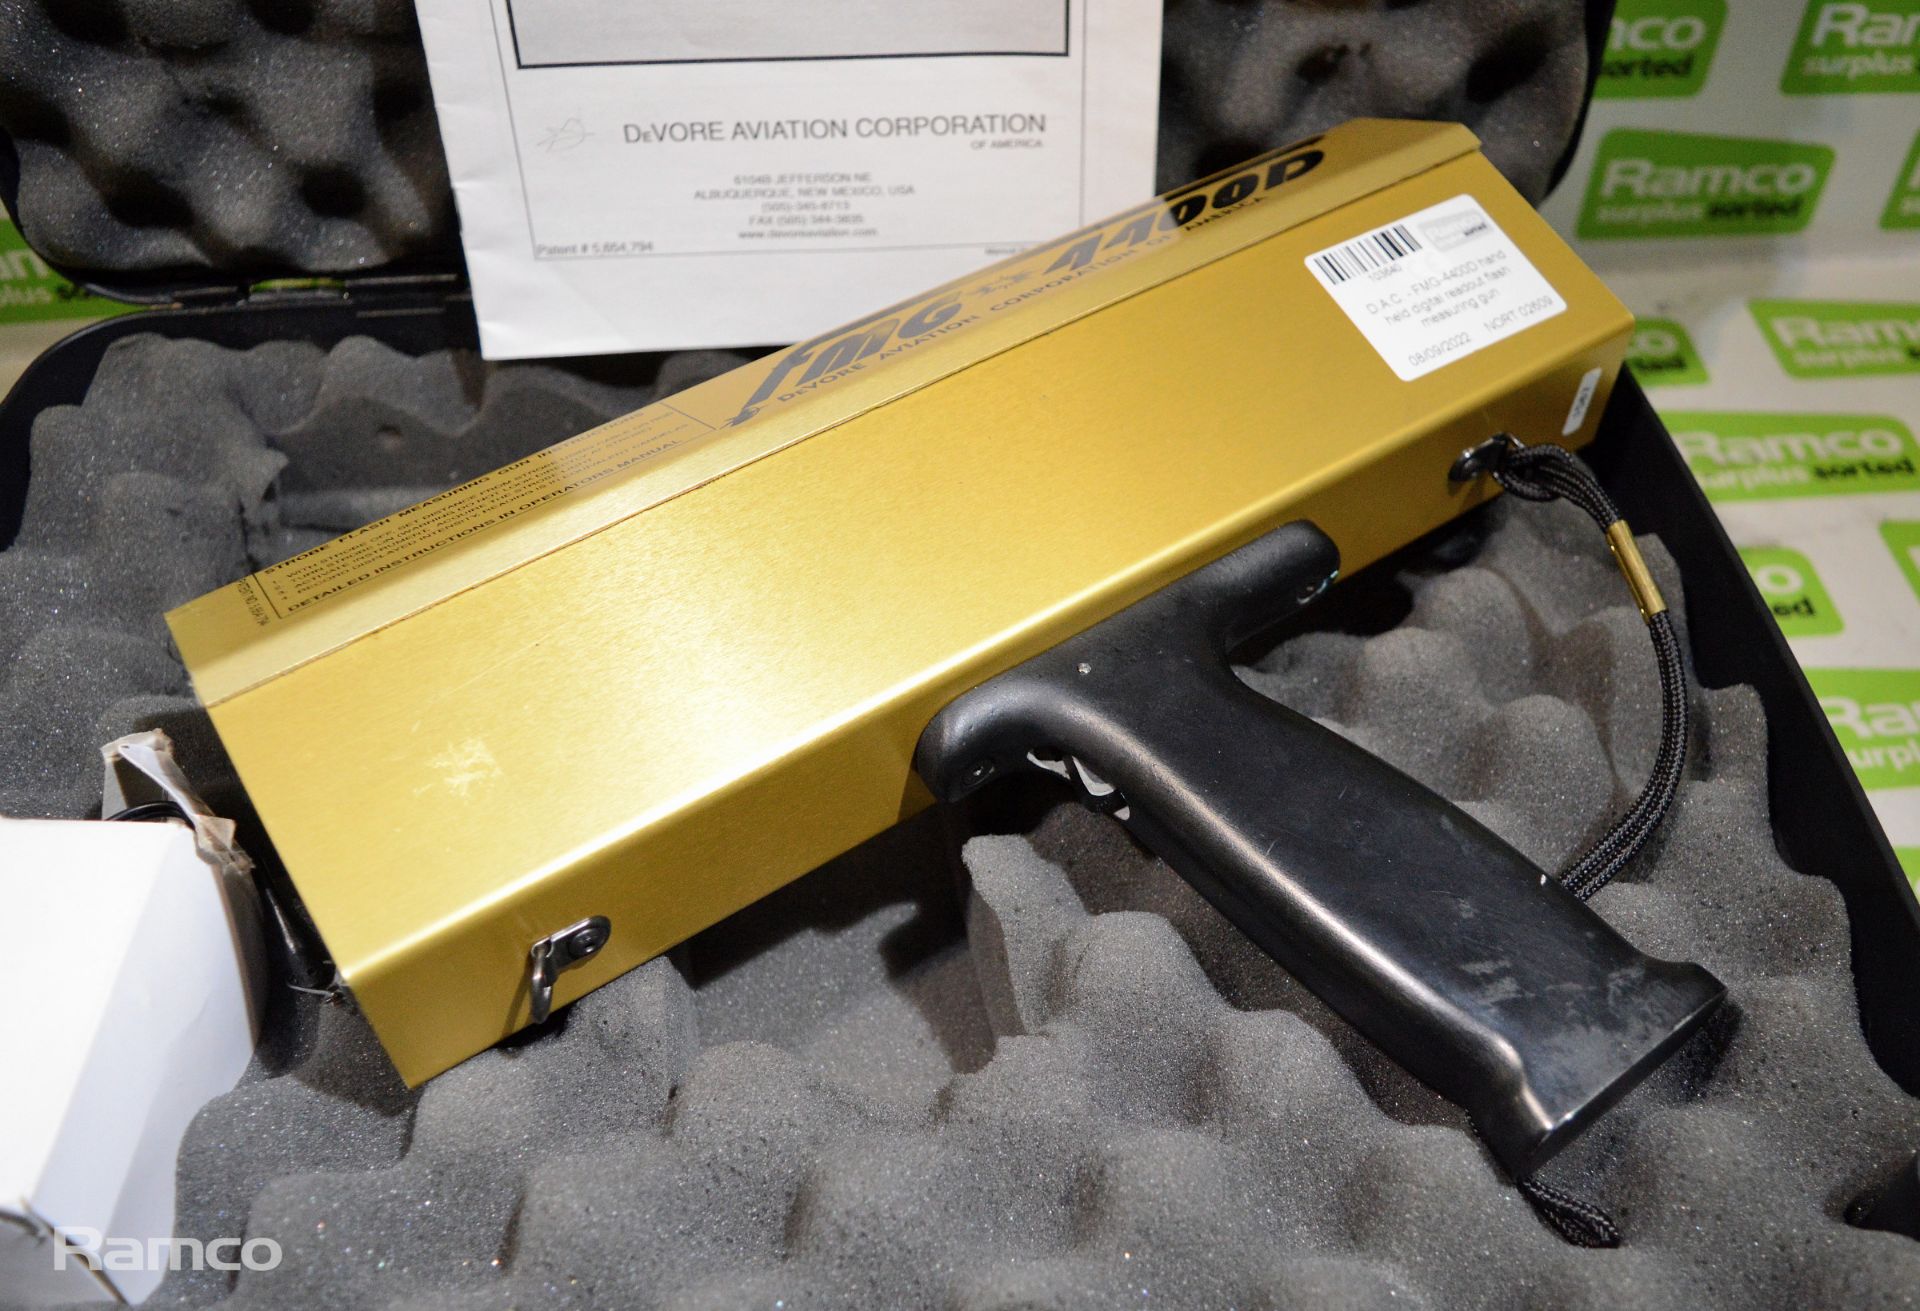 D.A.C. - FMG-4400D hand held digital readout flash measuring gun - Image 2 of 3